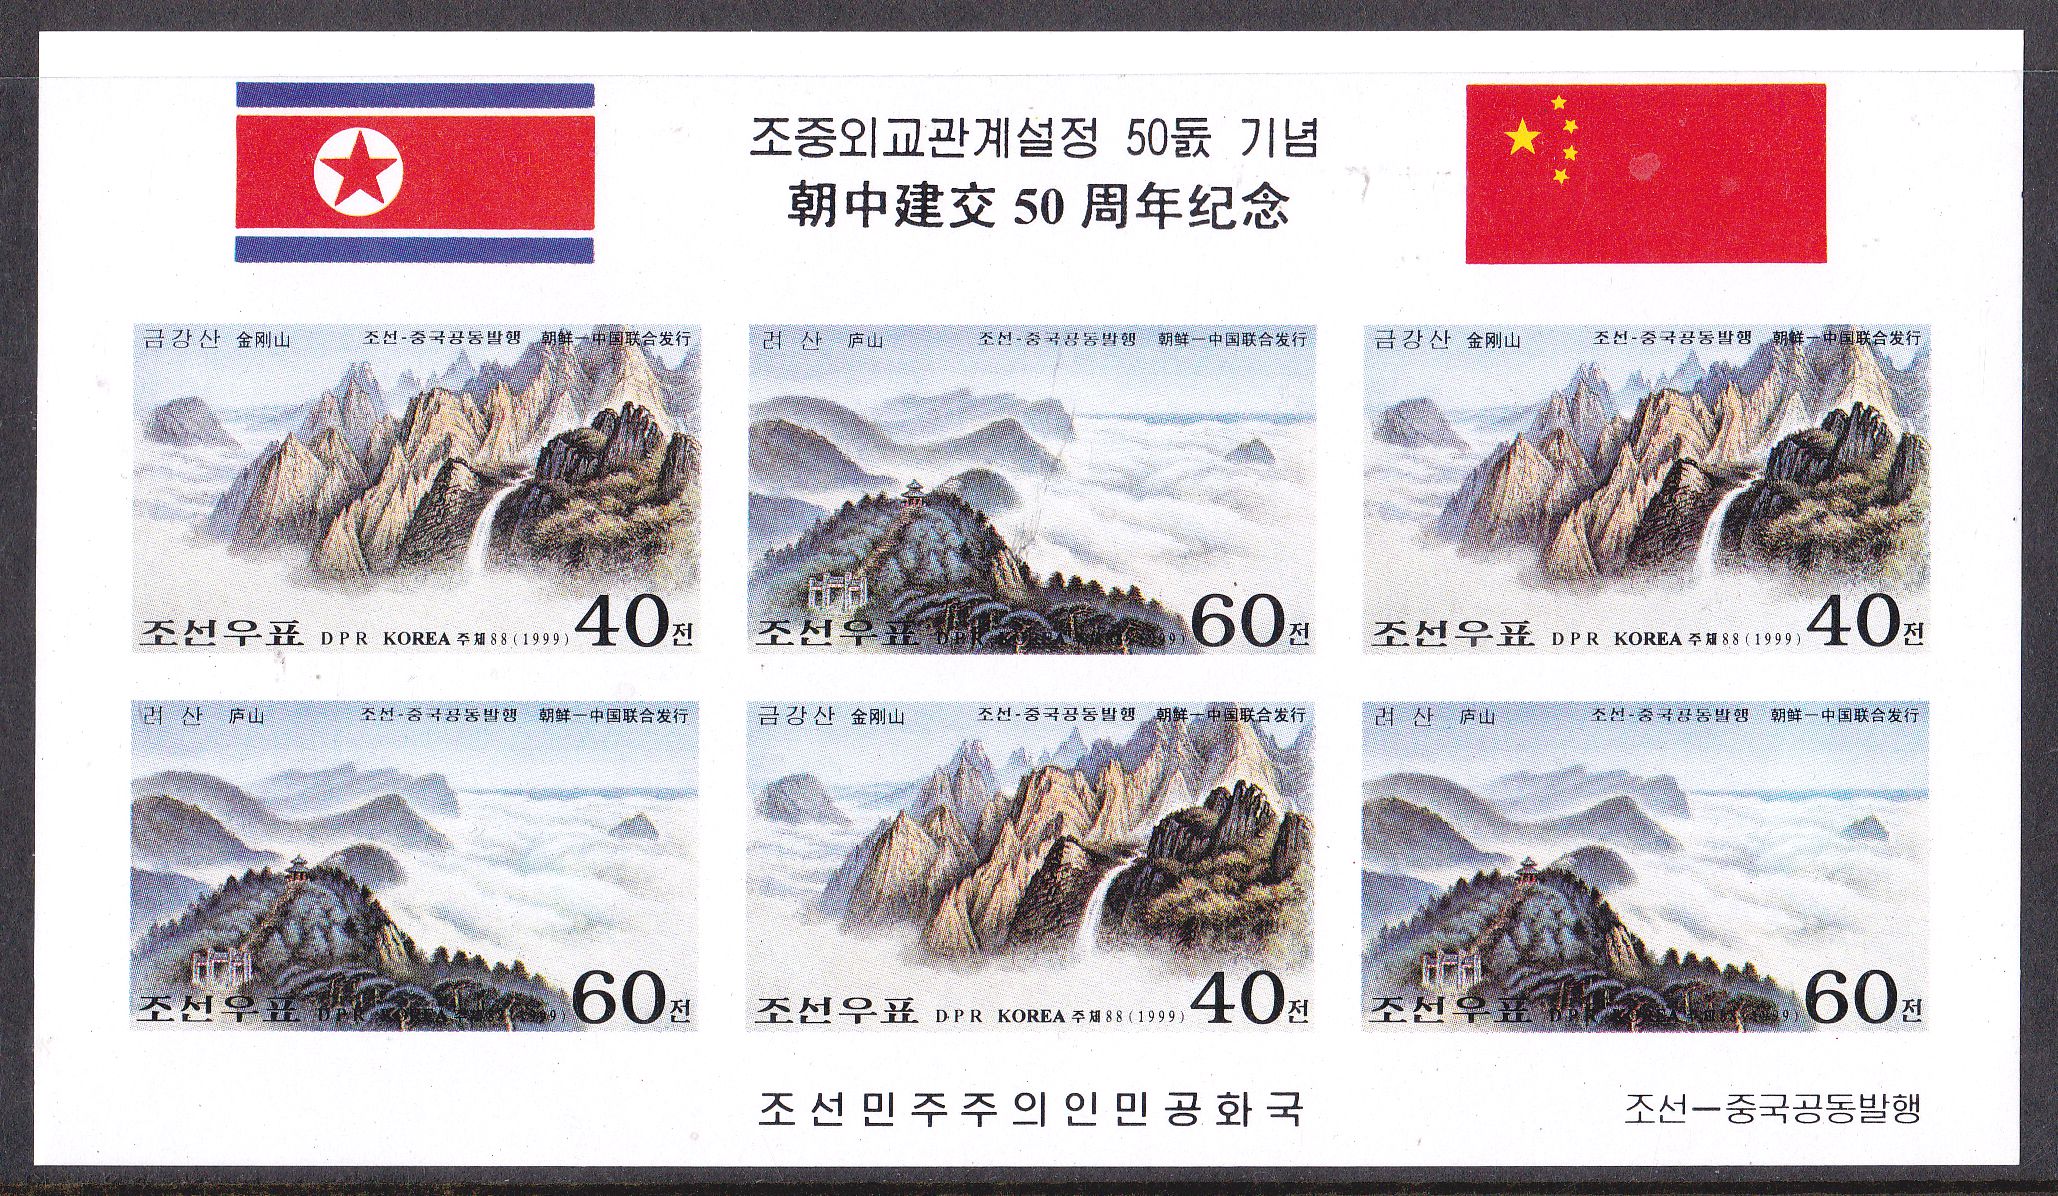 L4695, Korea "50th Anni China-Korea Diplomatic", 1999 Imperforate SS Stamp